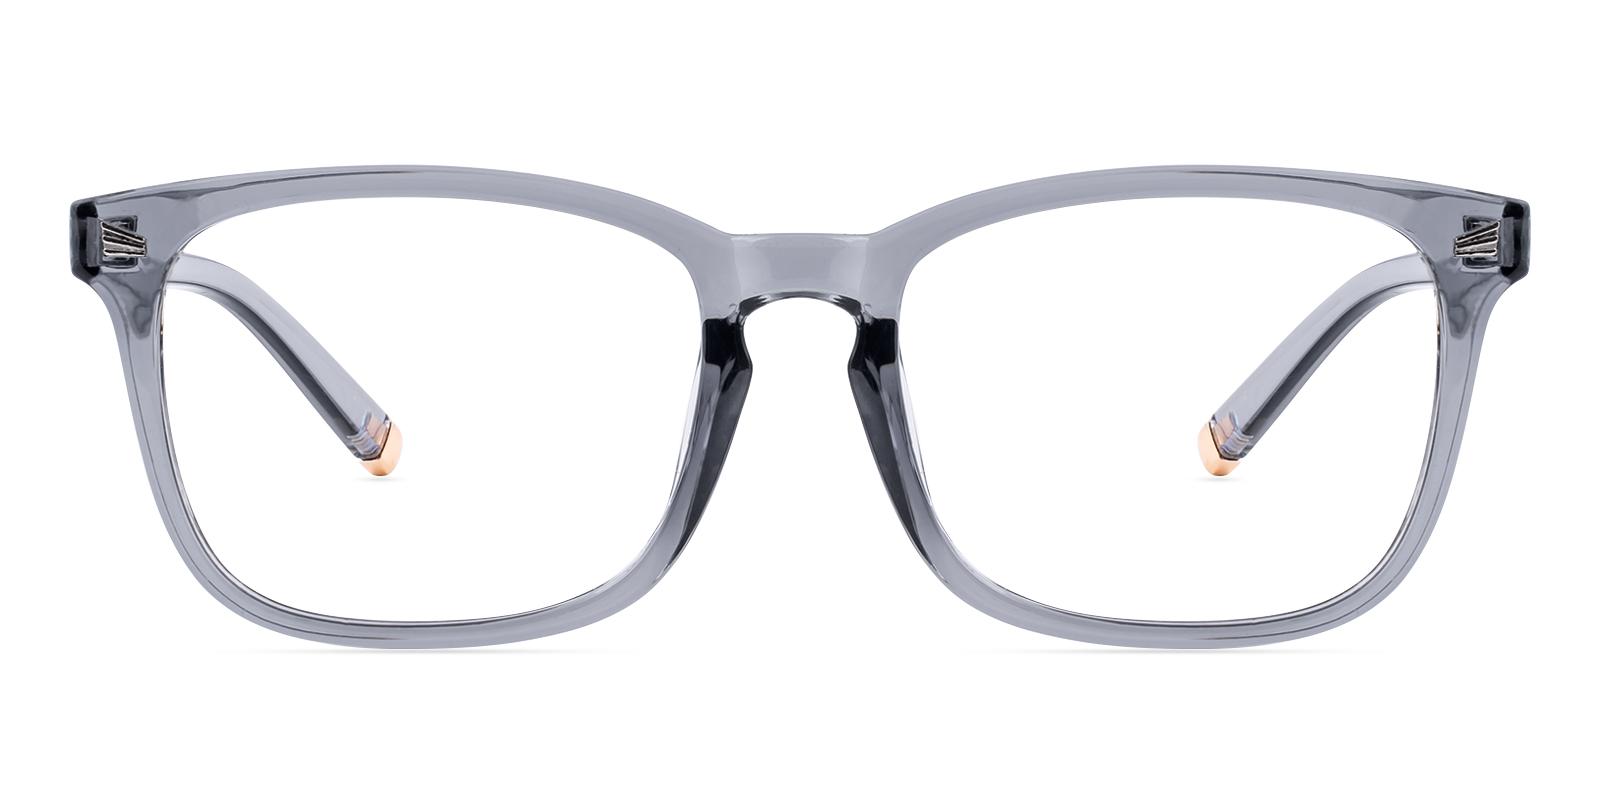 Quaternor Gray Plastic Eyeglasses , UniversalBridgeFit Frames from ABBE Glasses